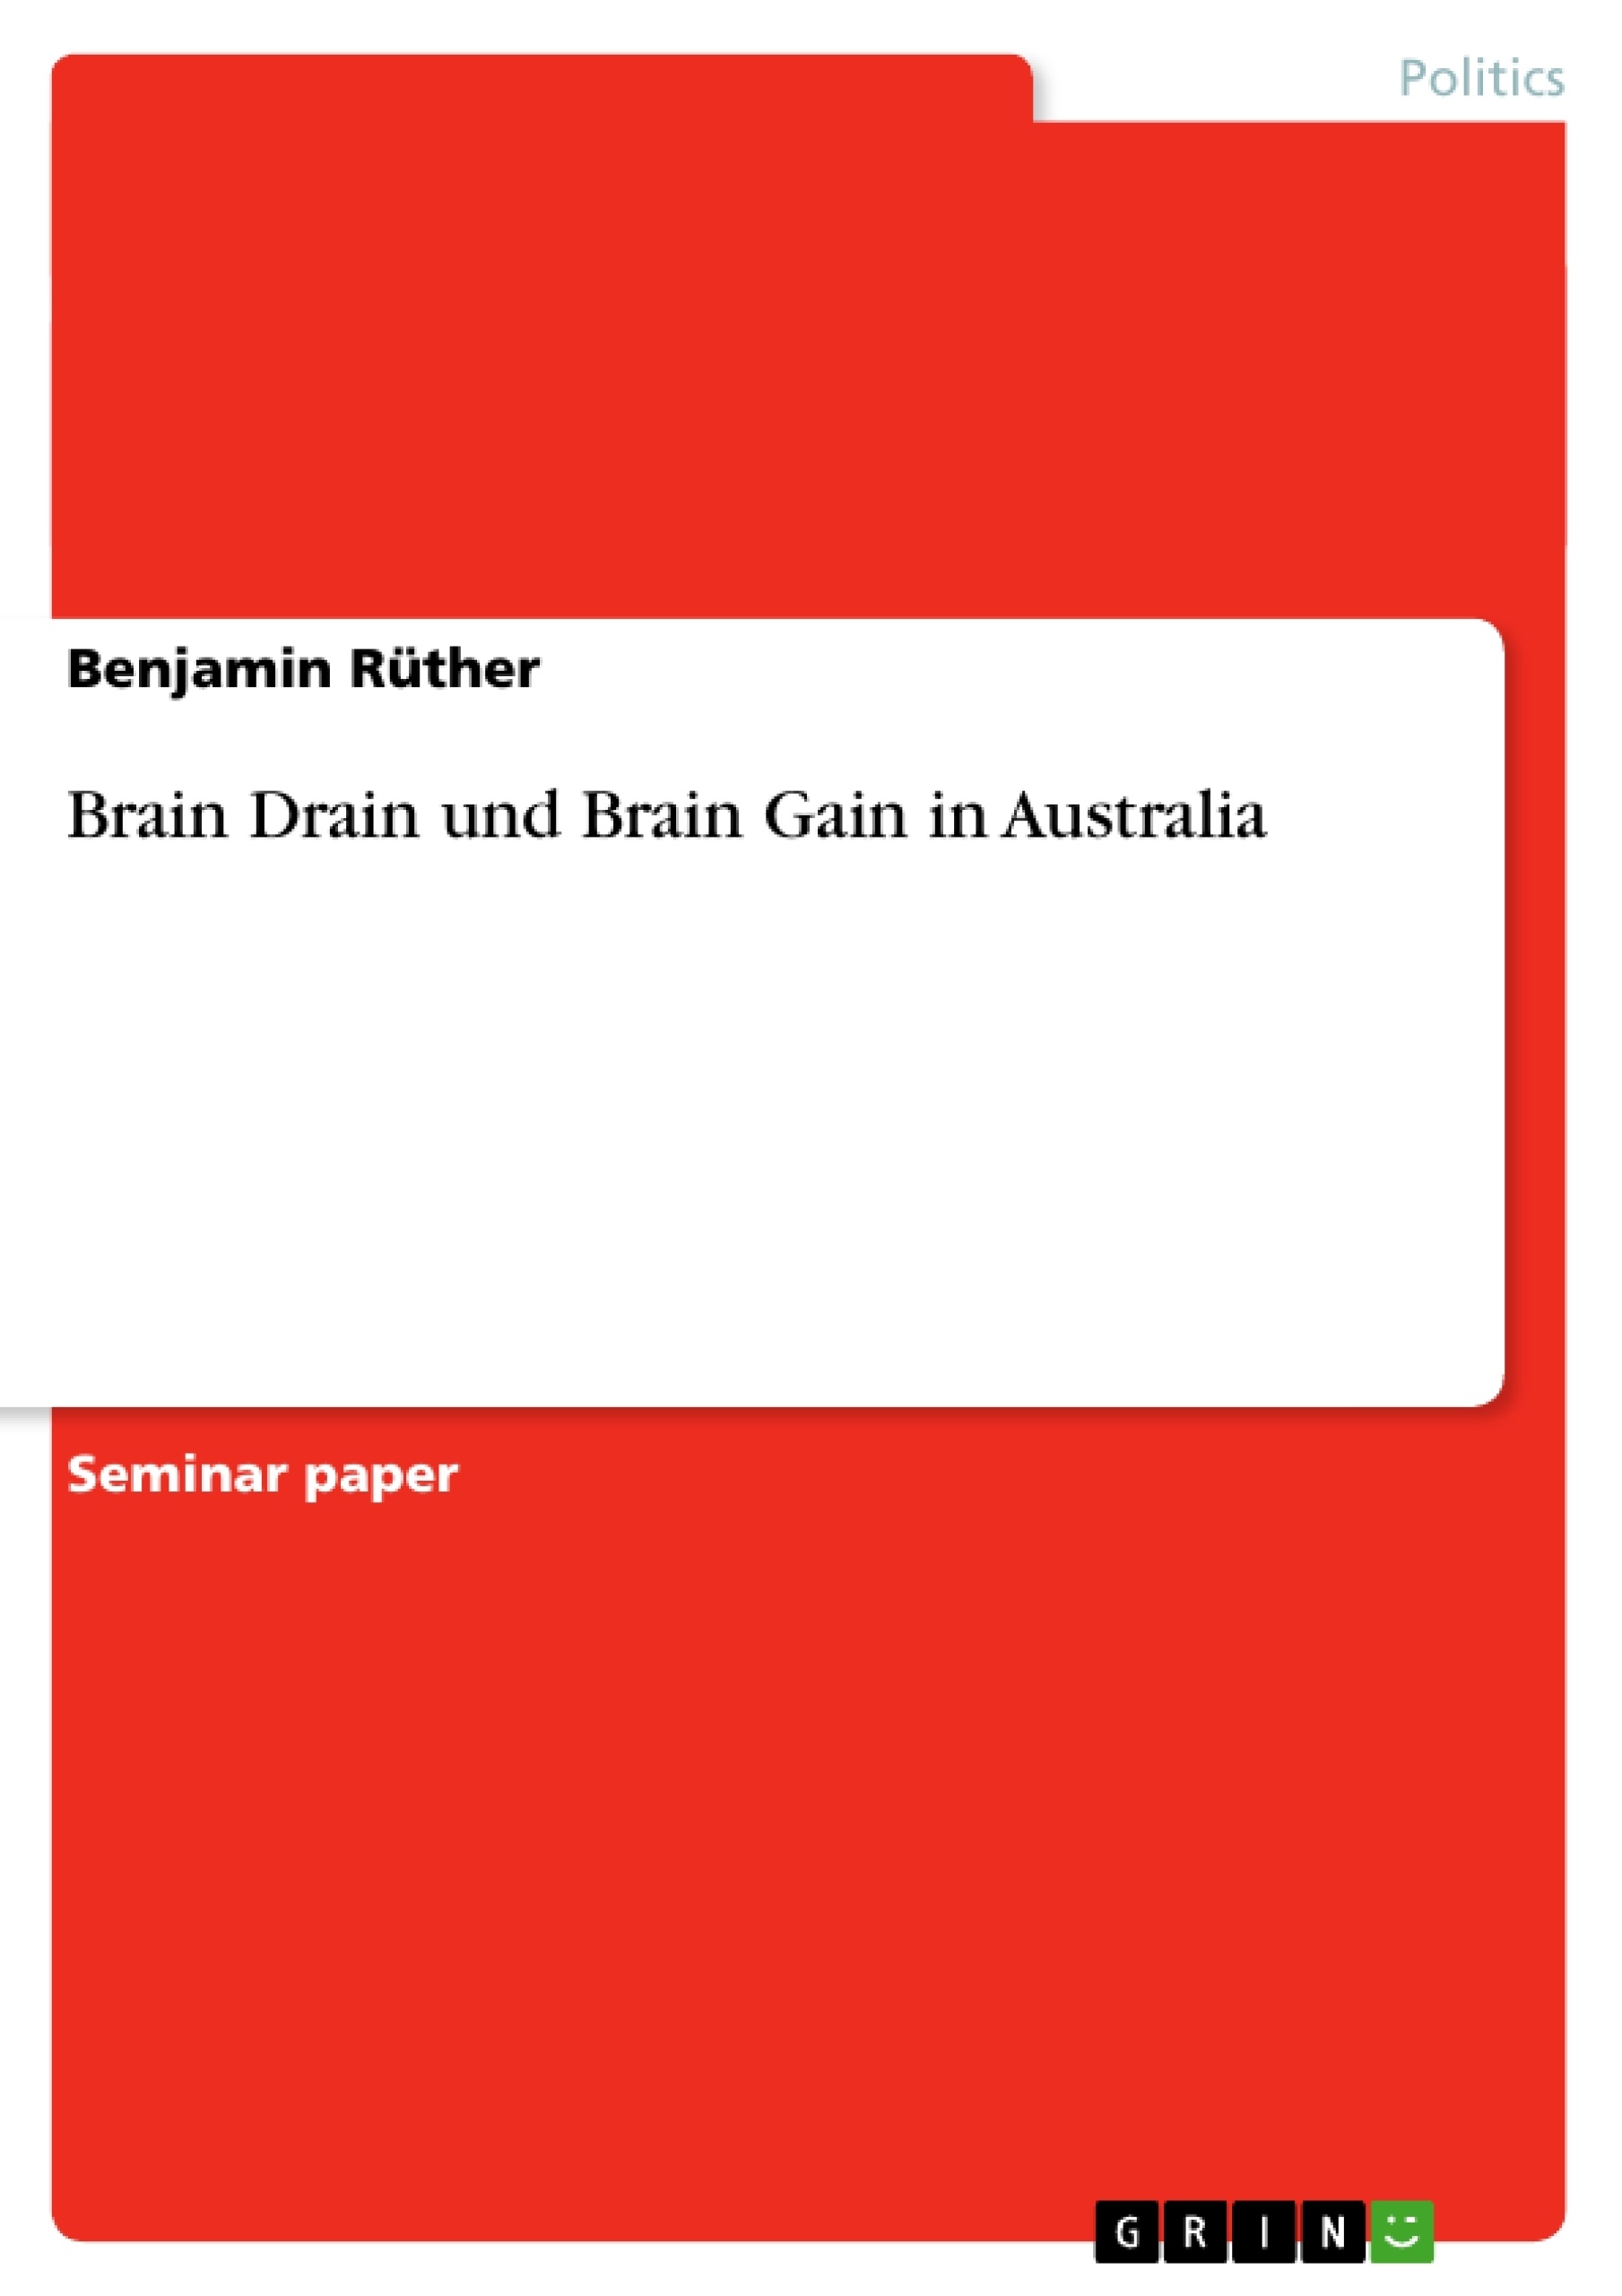 Title: Brain Drain und Brain Gain in Australia